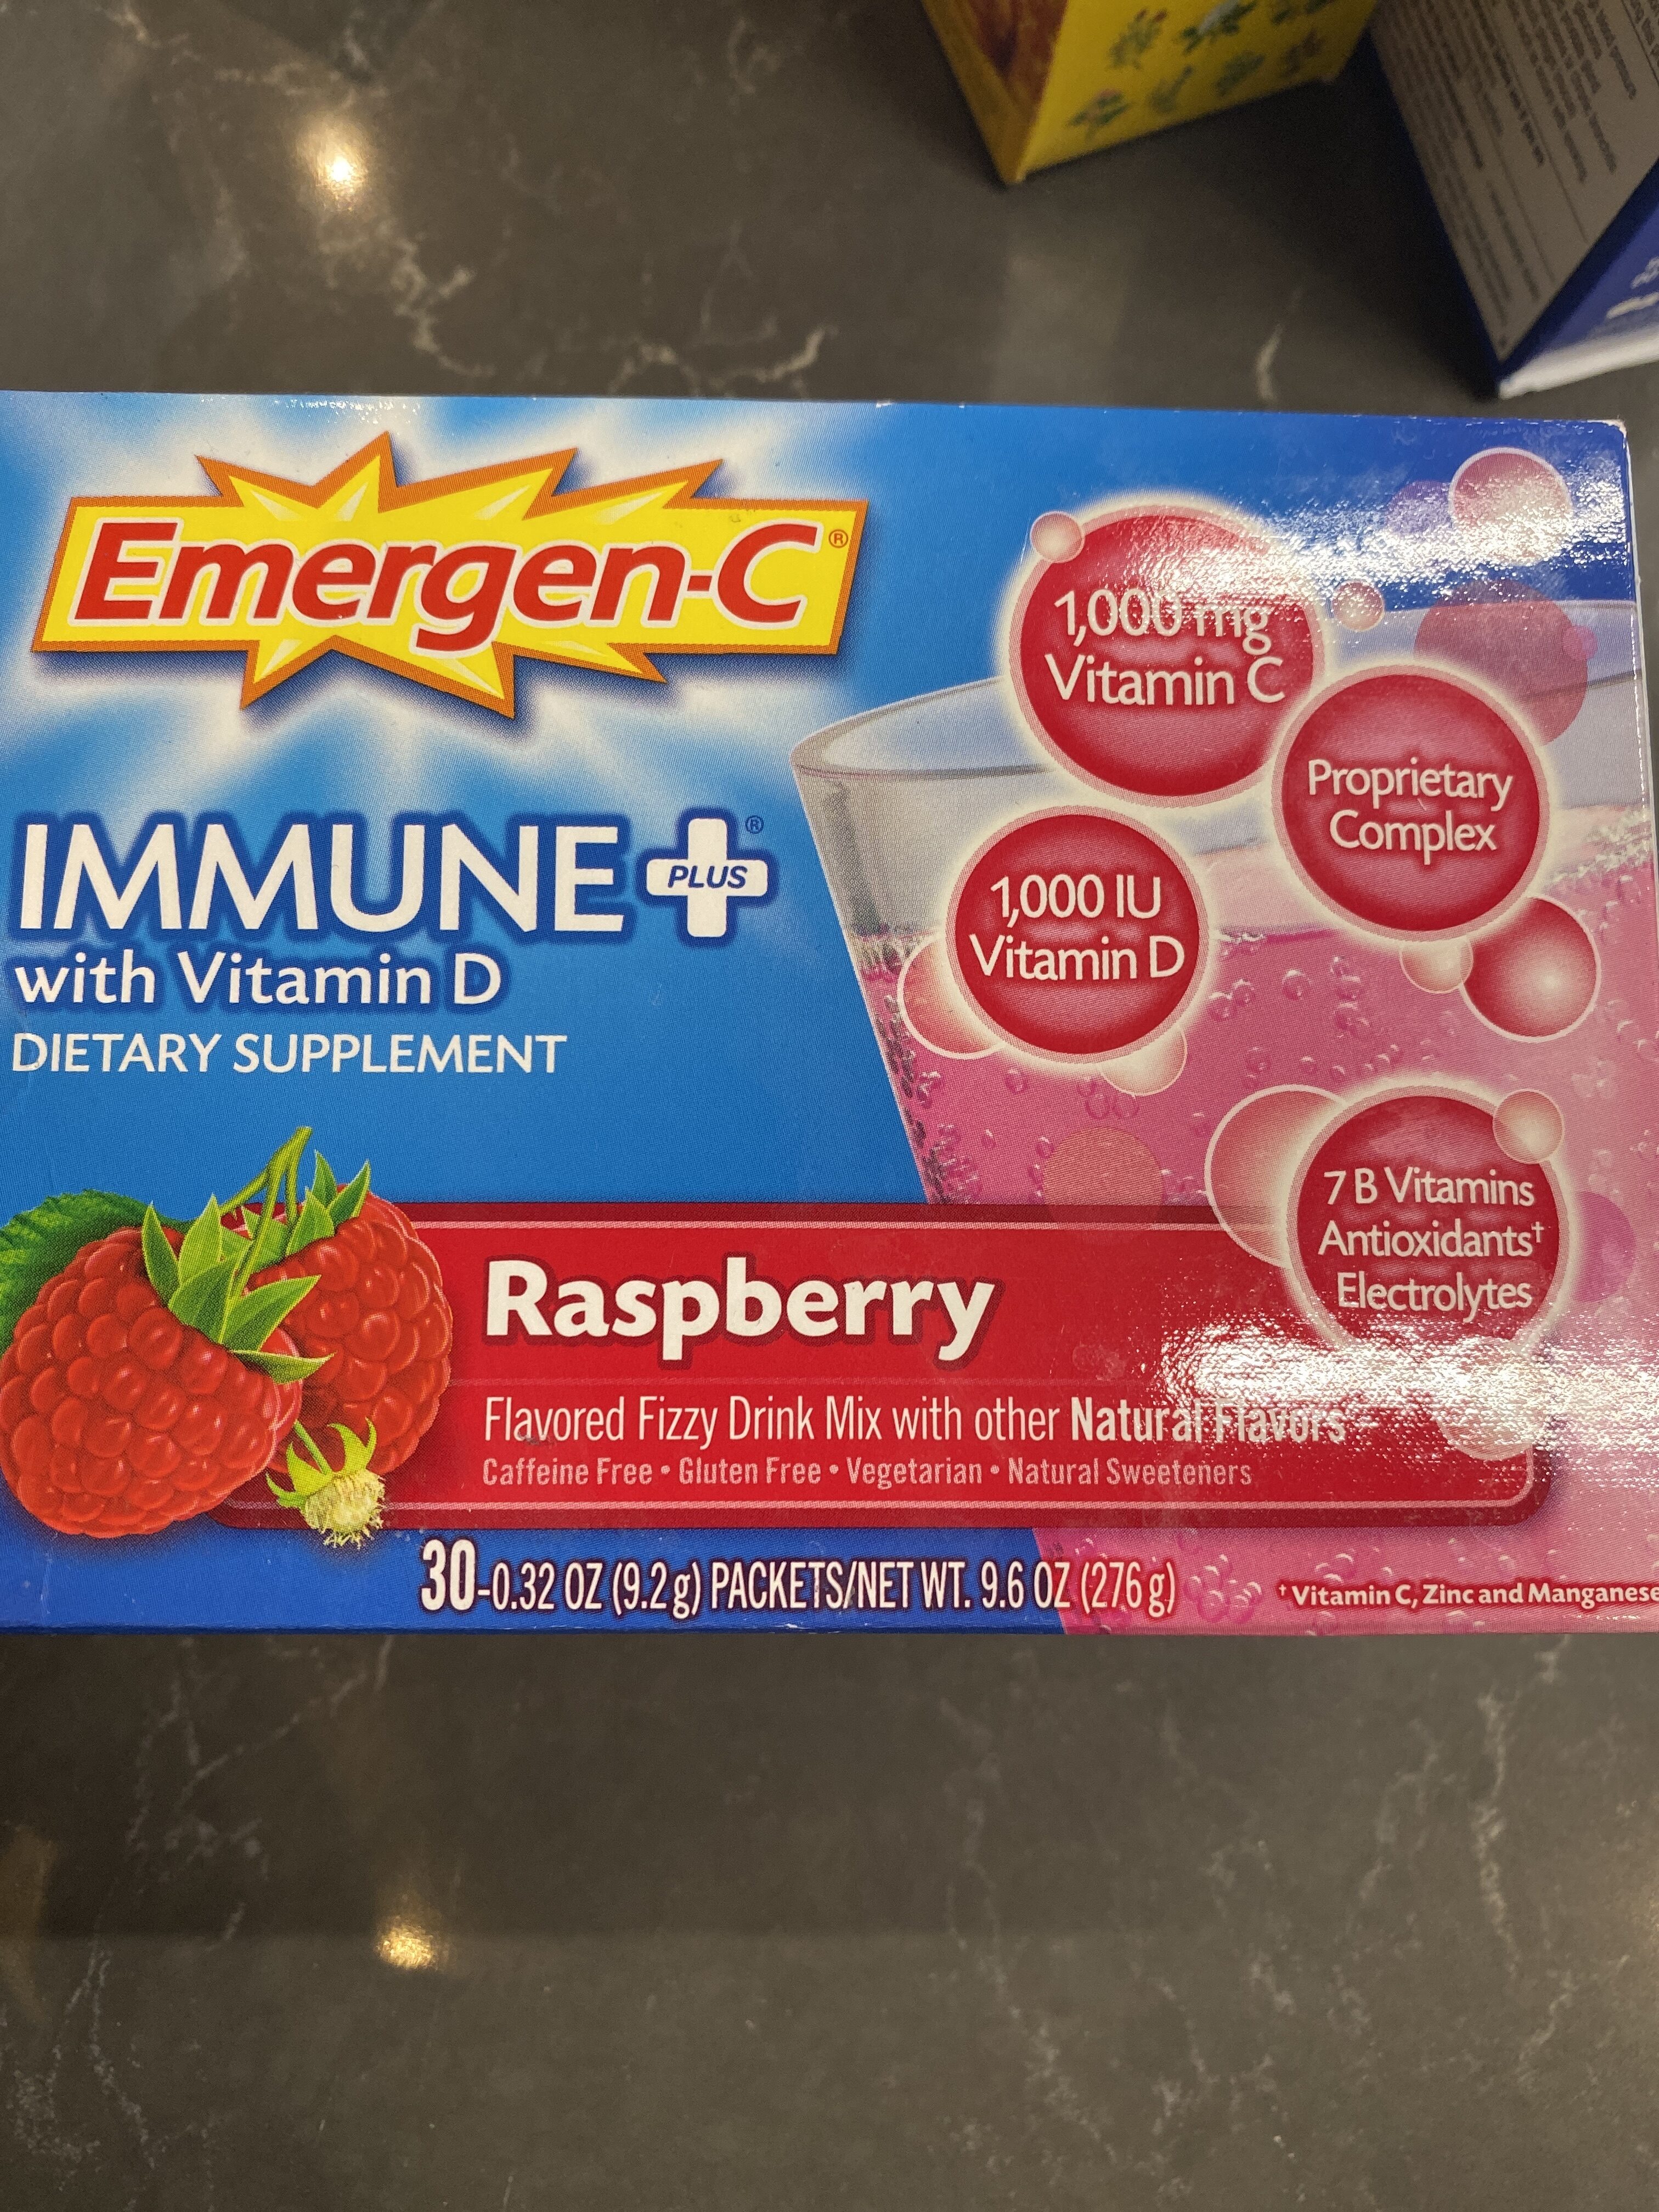 Alacer emer'gen-c immune + raspberry - Prodotto - en